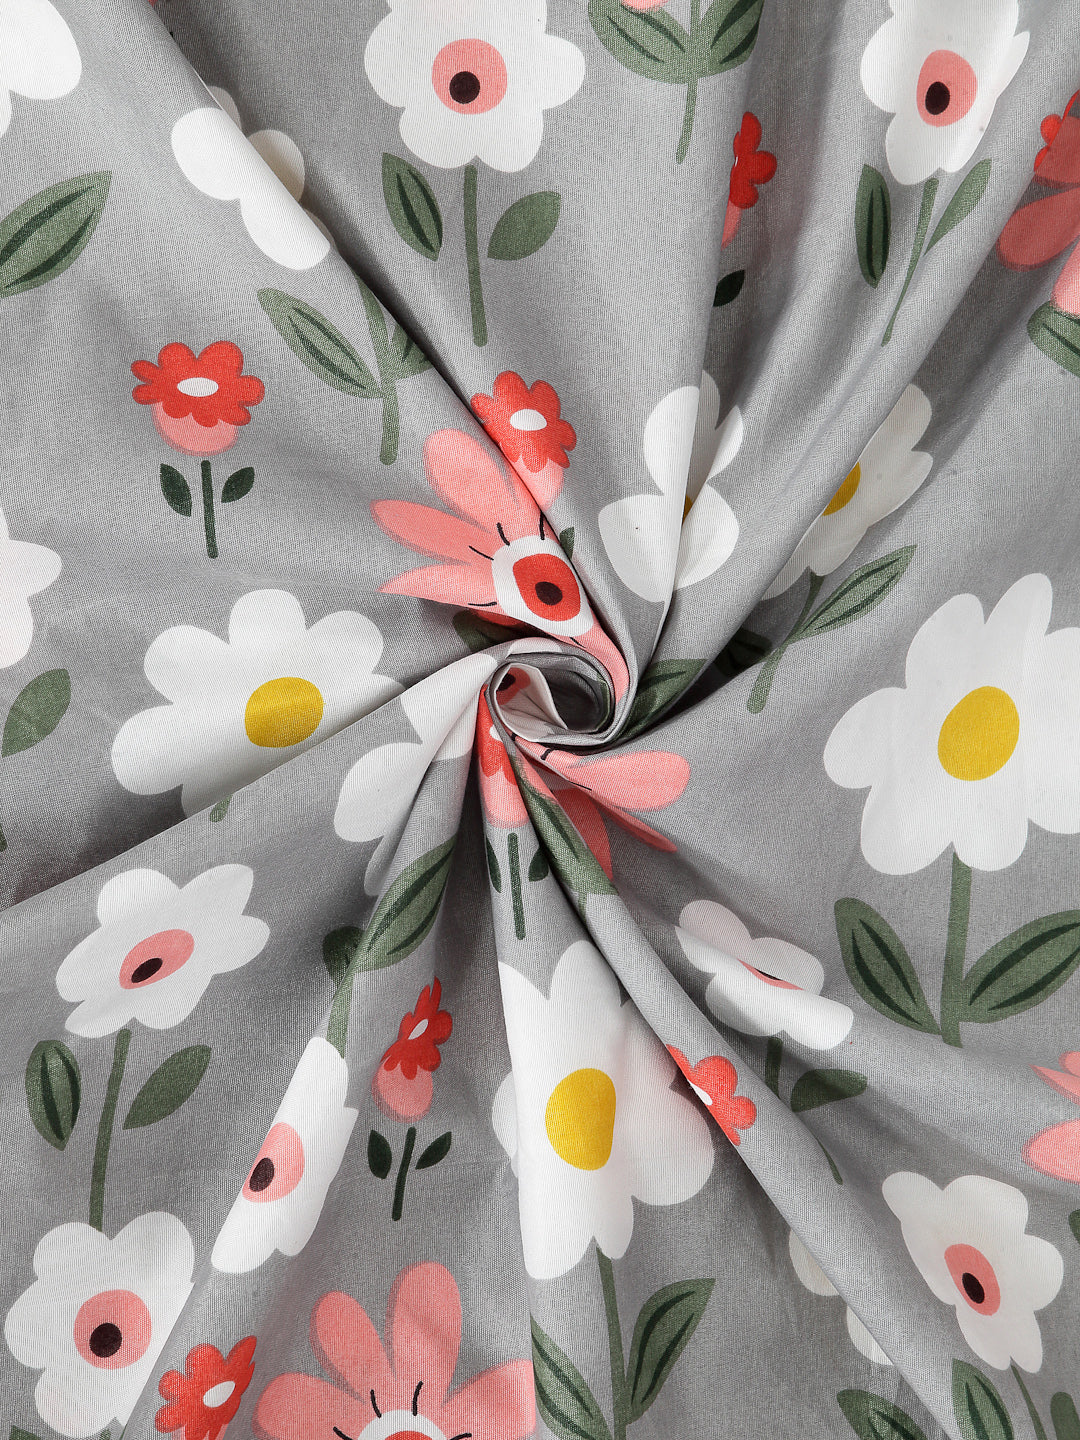 Arrabi Grey Floral TC Cotton Blend King Size Bedsheet with 2 Pillow Covers (250 X 215 cm)